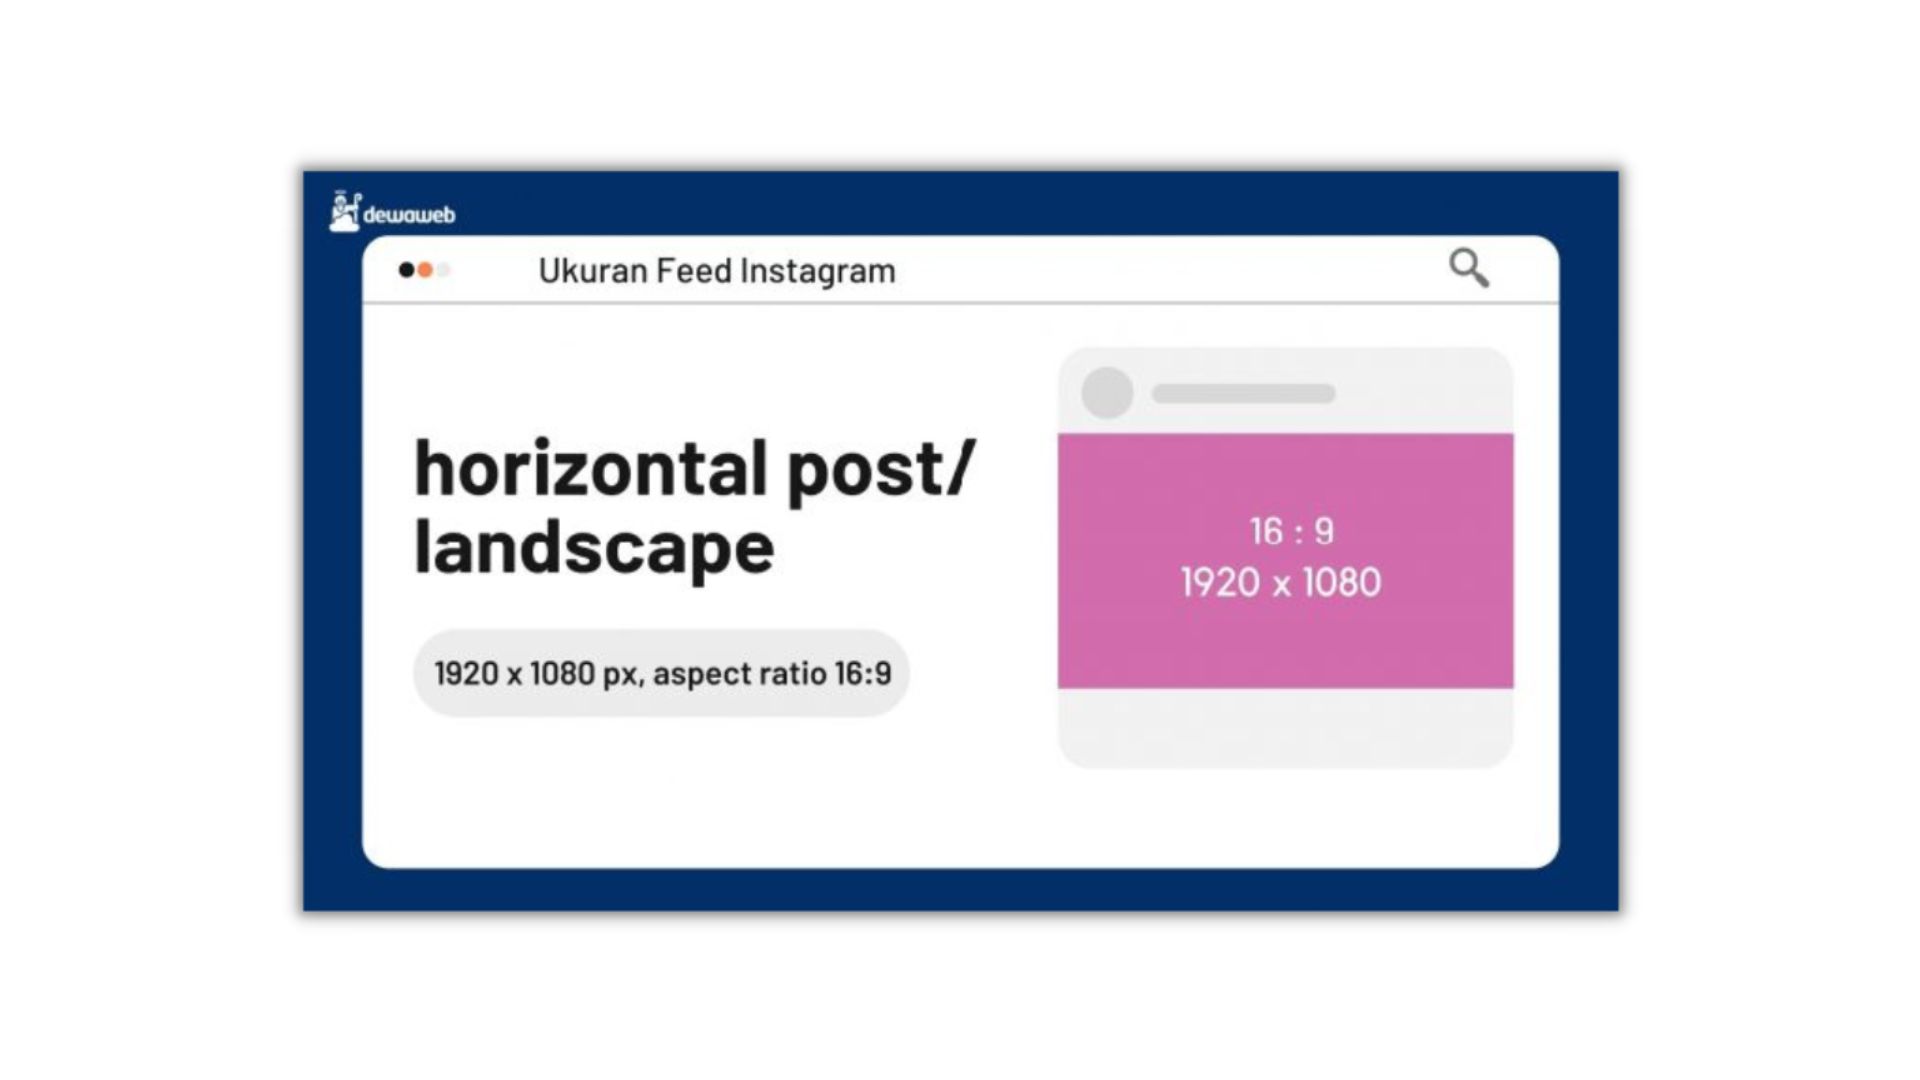 ukuran feed instagram - horizontal post